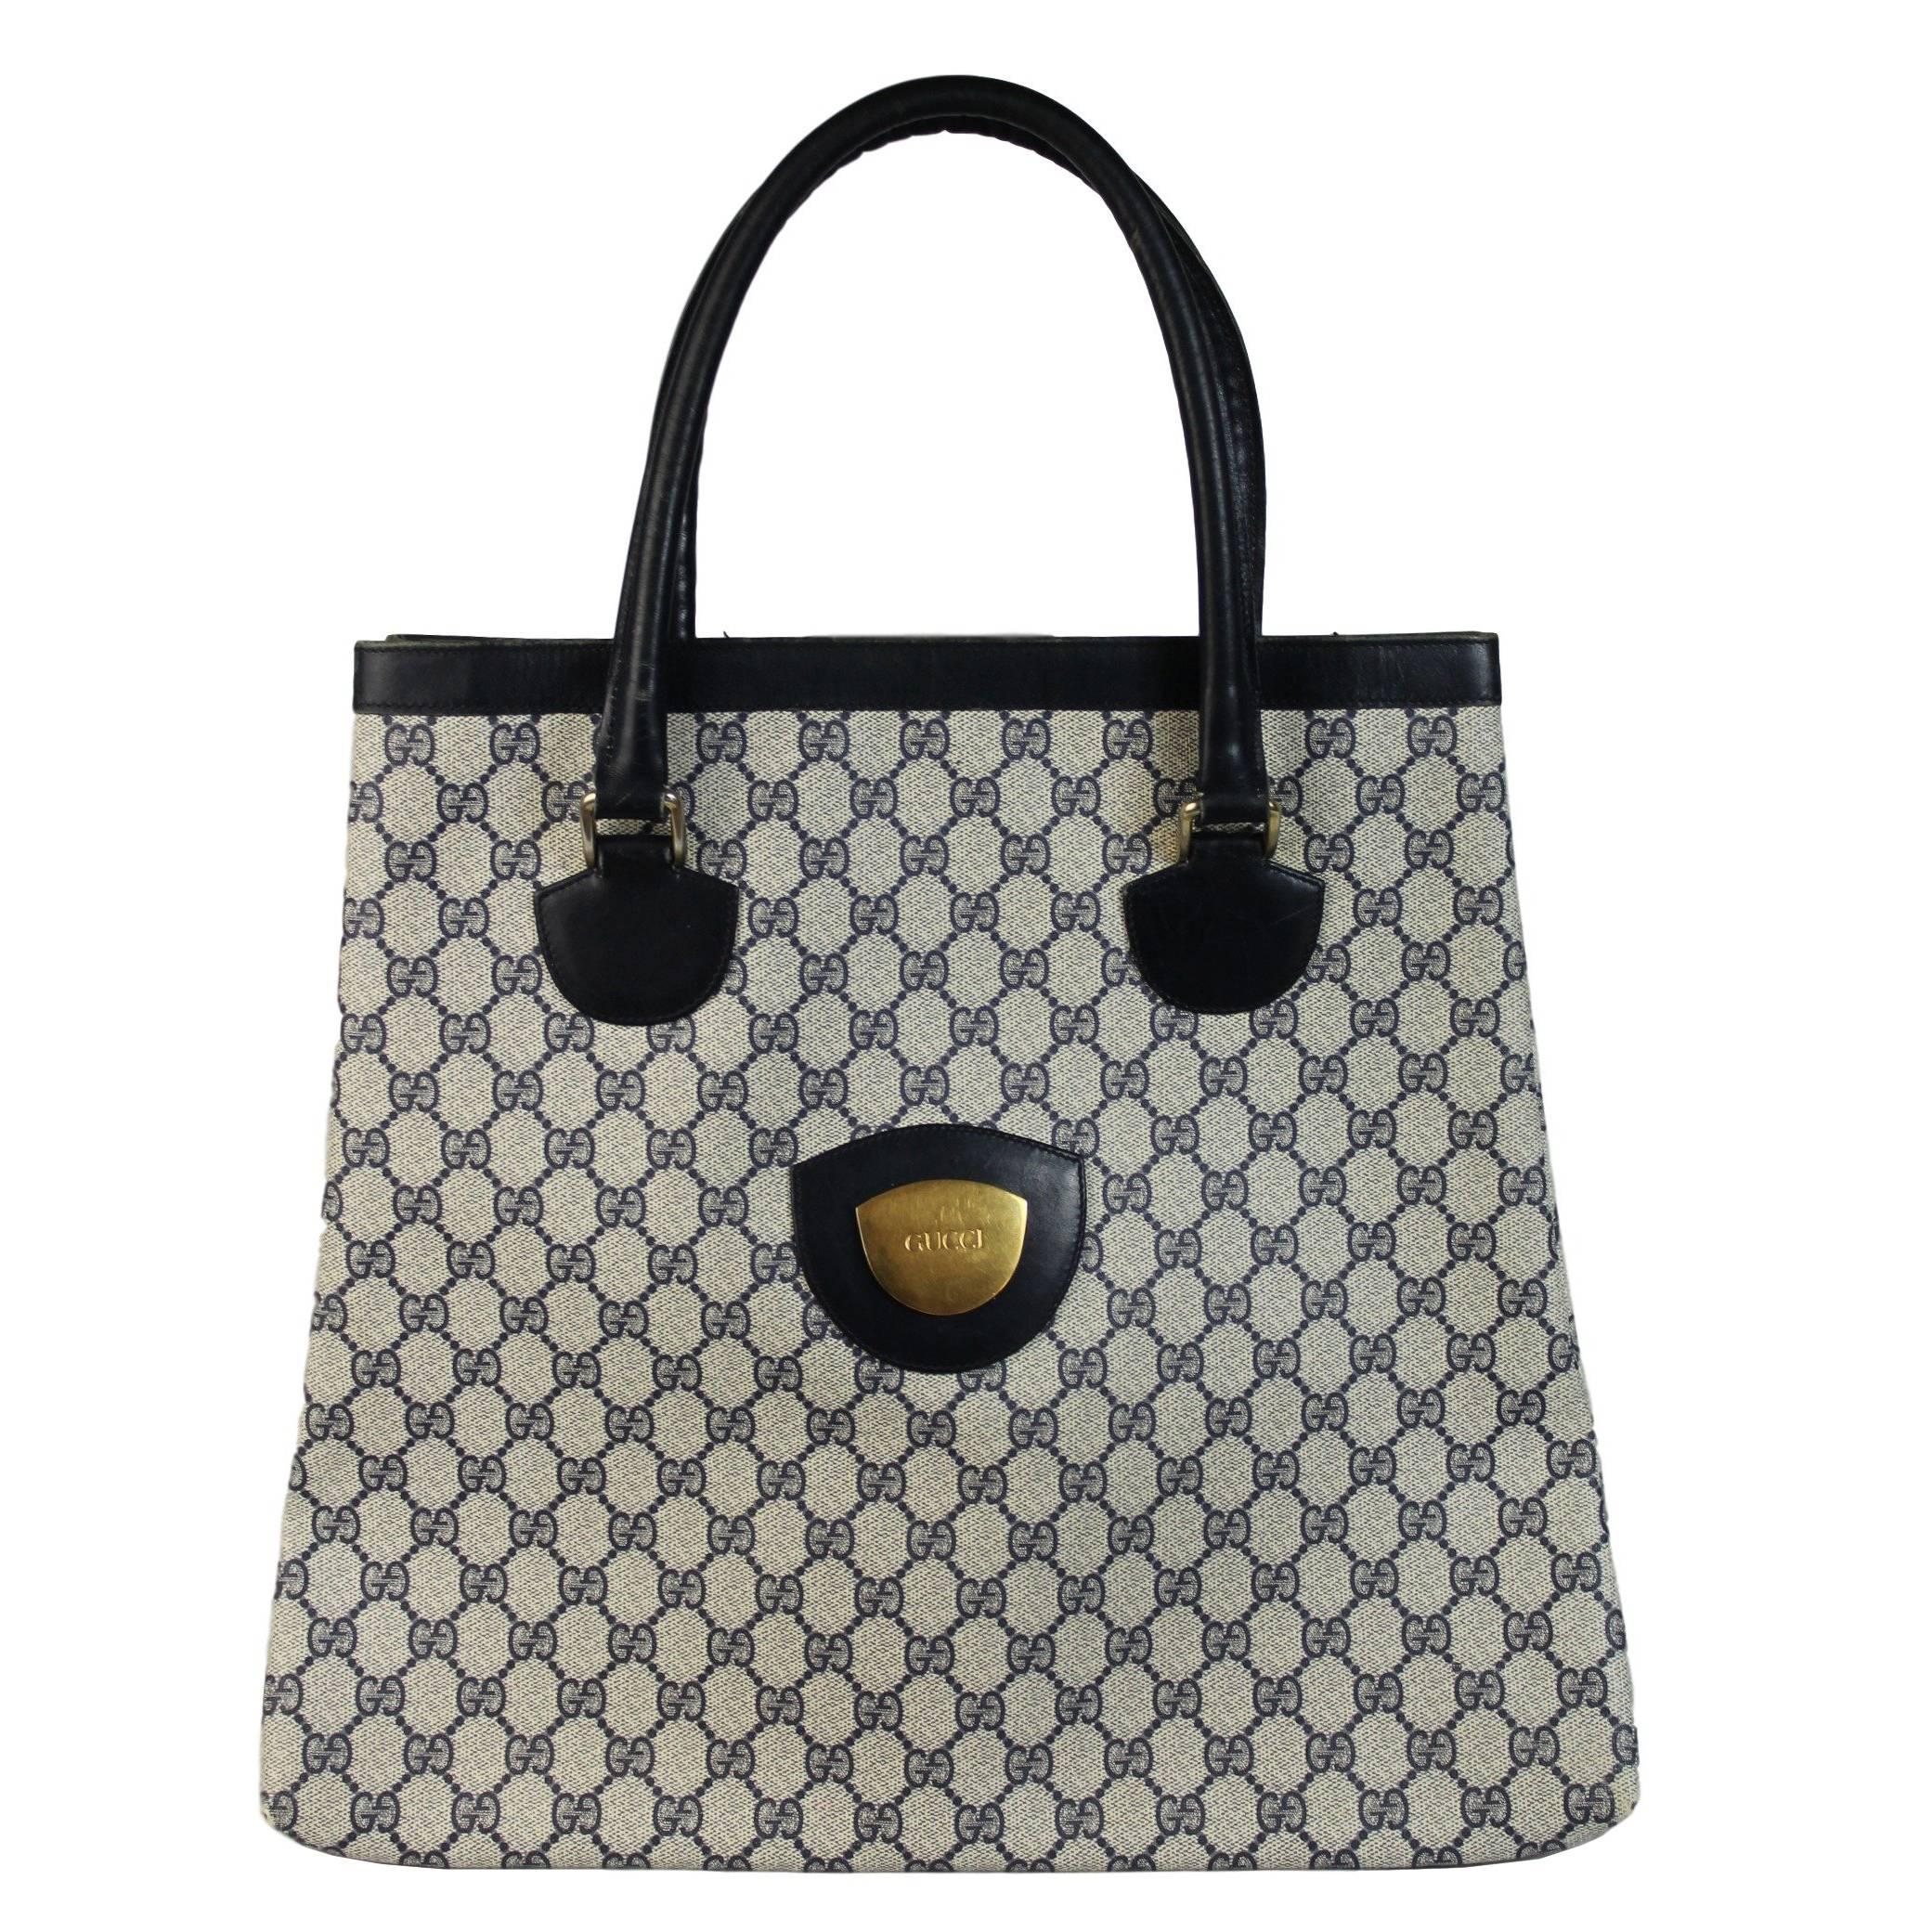 Gucci monogram 1980'si shopper leather bag blue tote handbag